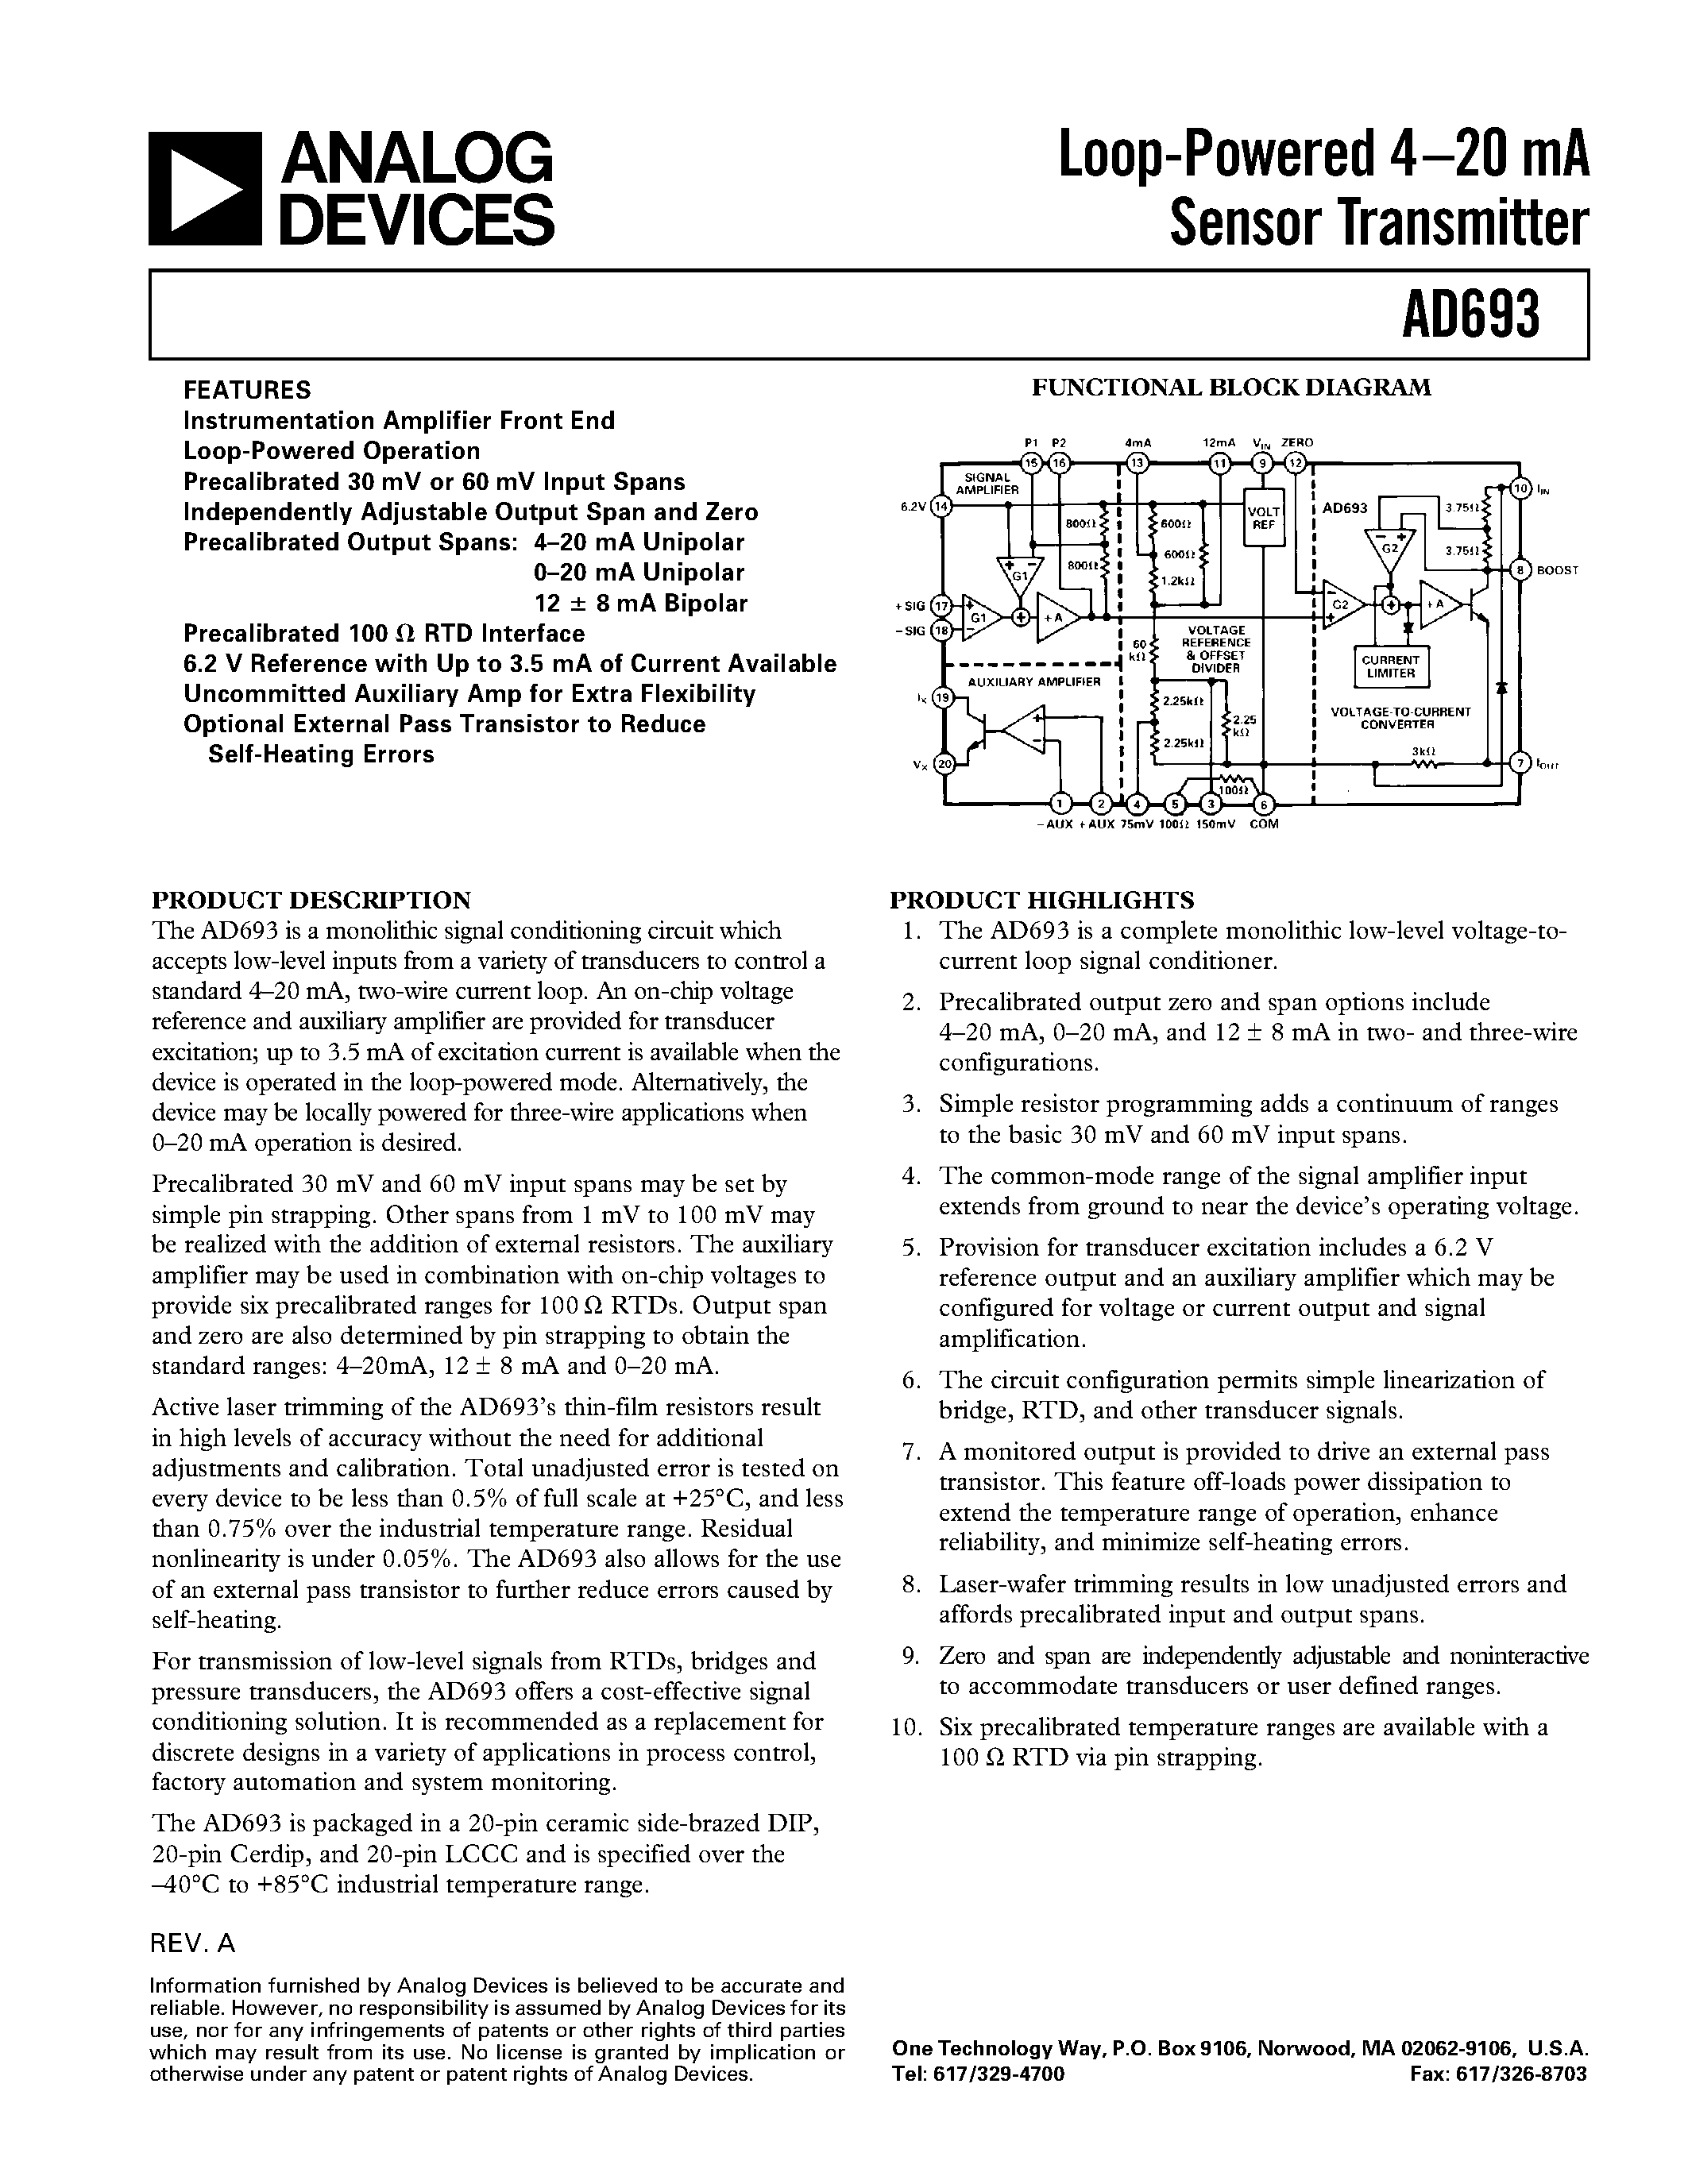 Datasheet AD693AQ - Loop-Powered 4.20 mA Sensor Transmitter page 1